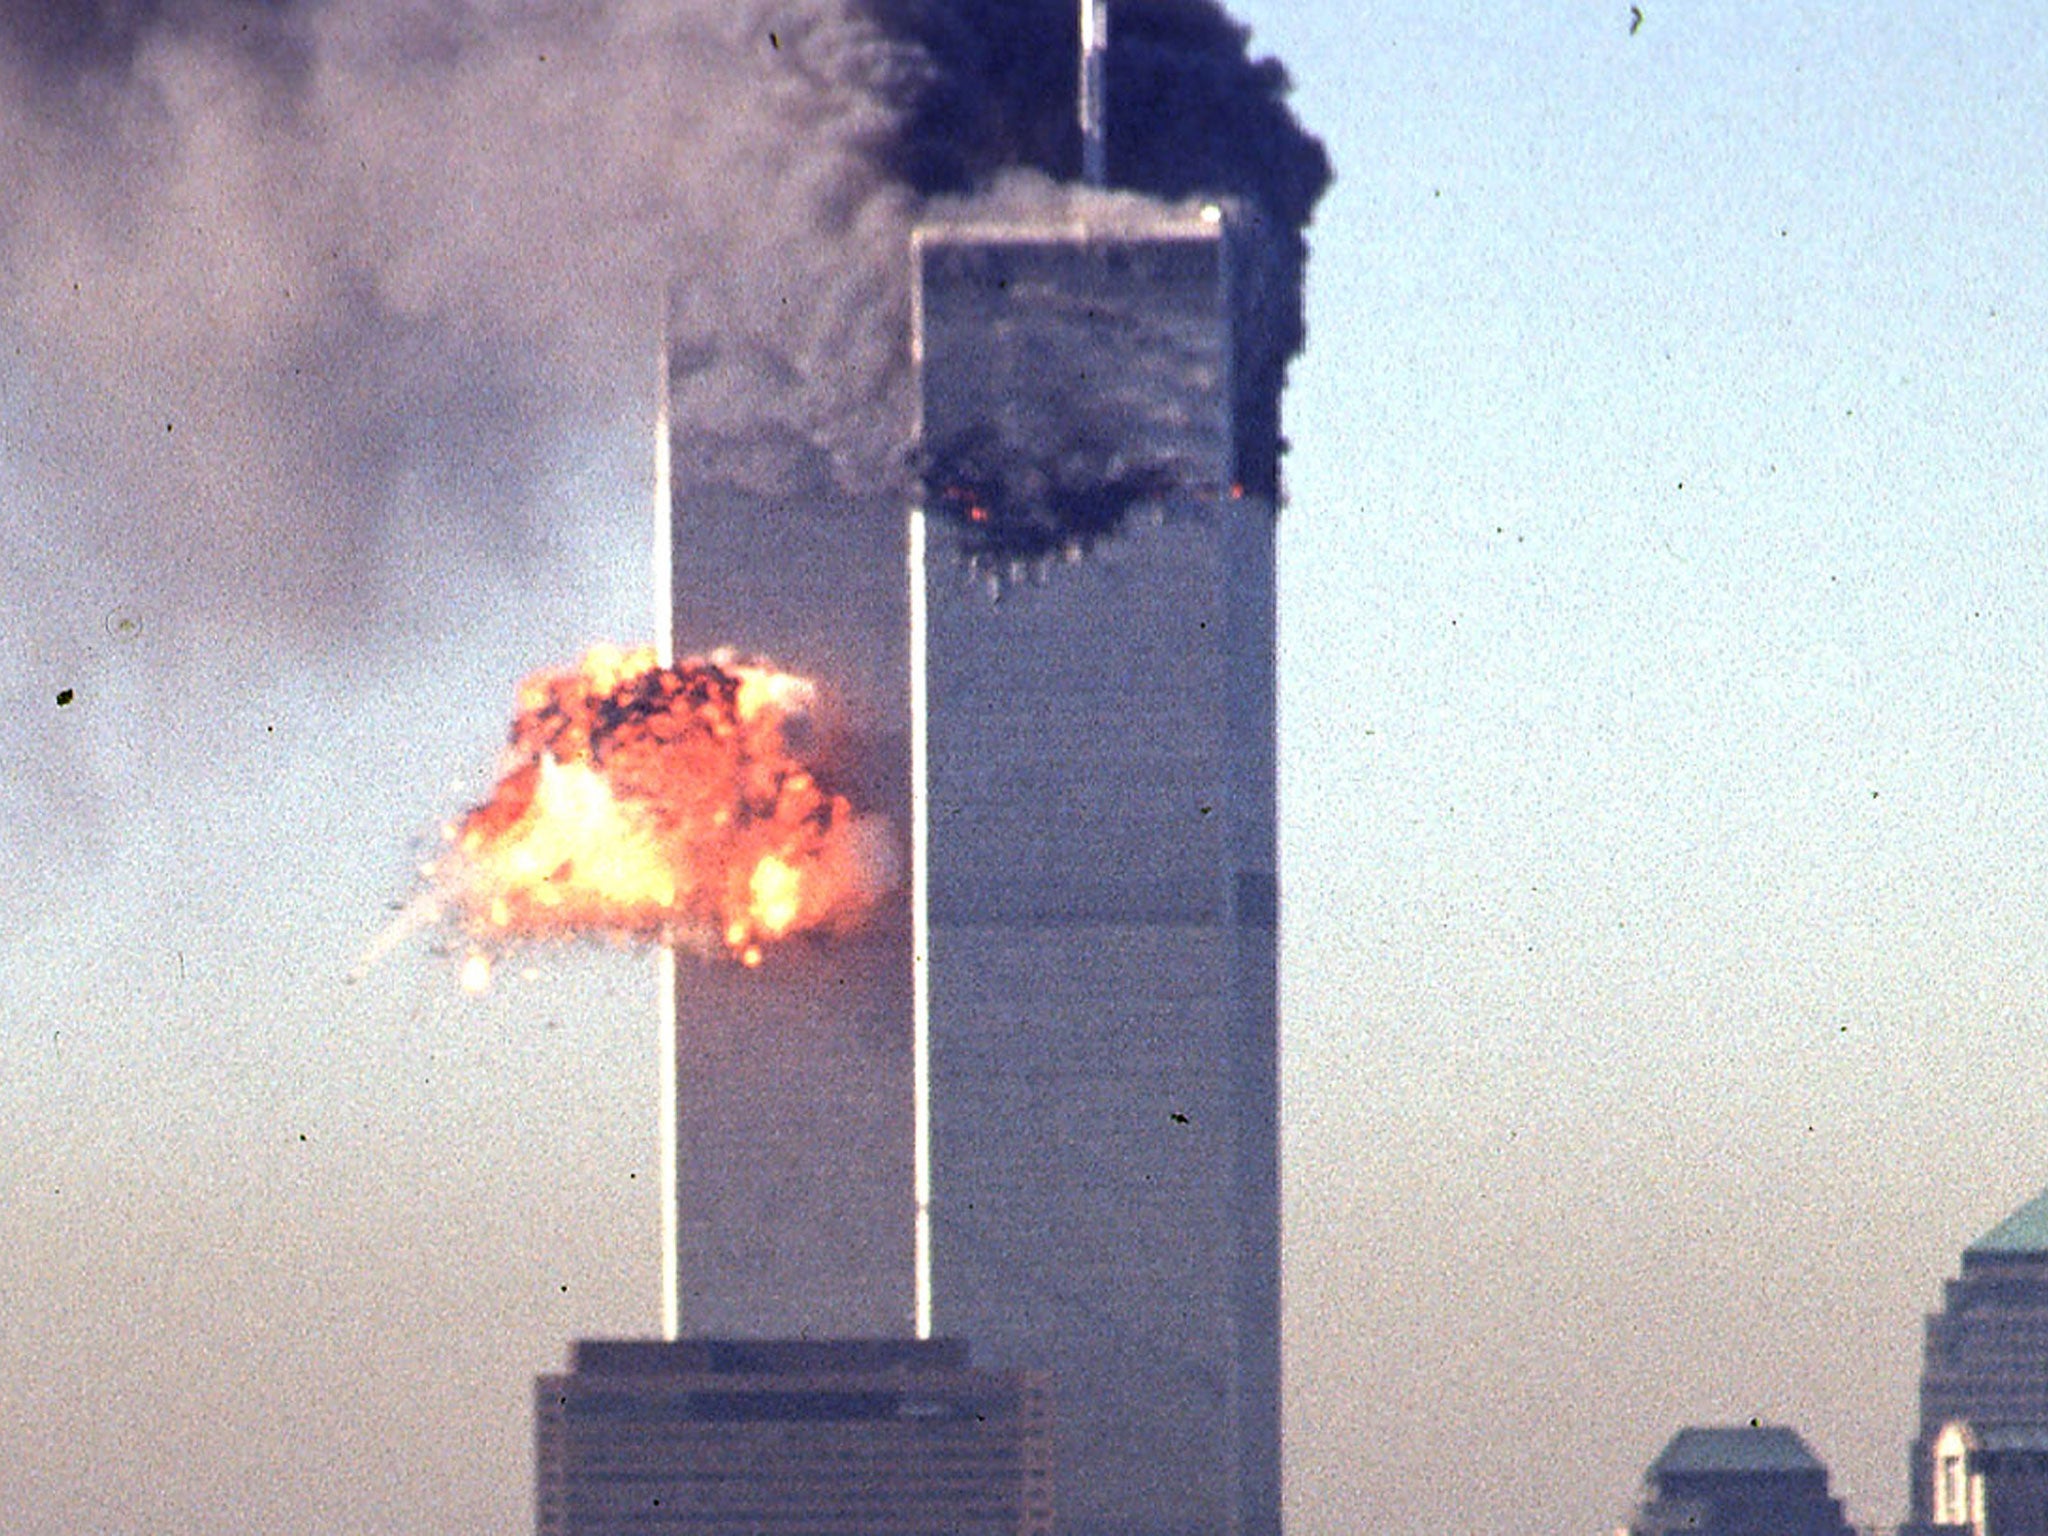 9/11: America's greatest trauma